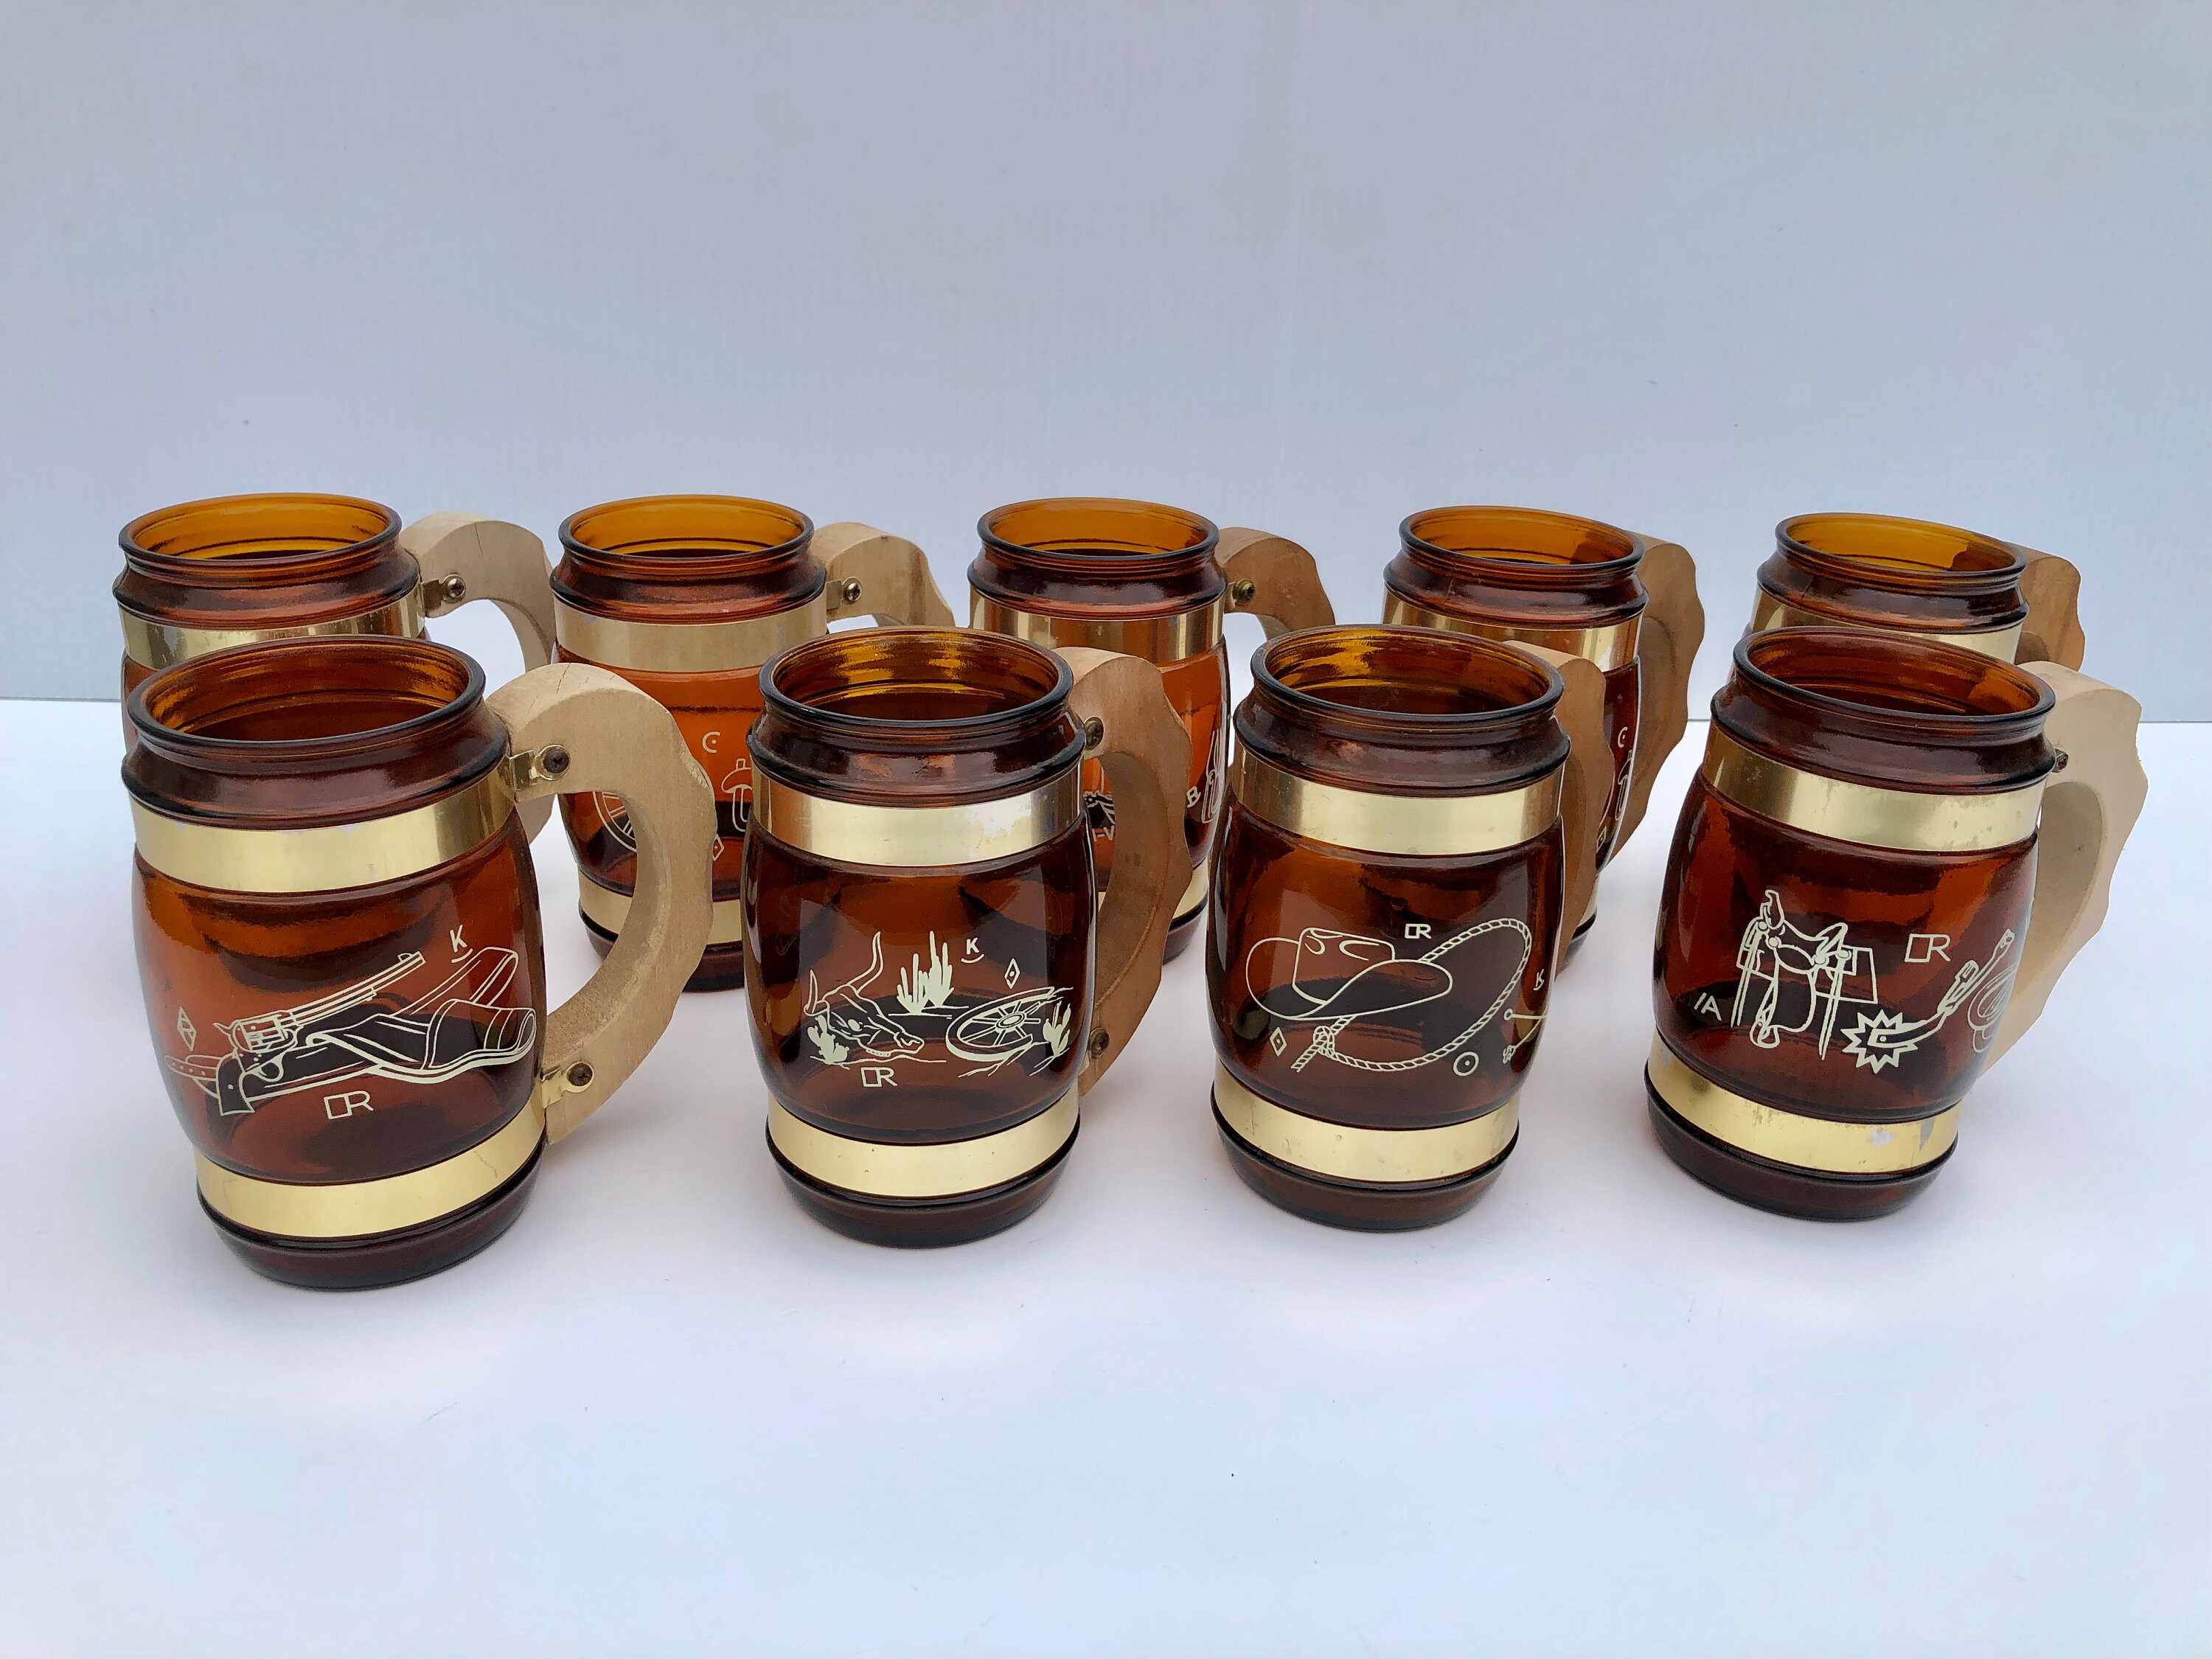 Vintage Siesta Ware Cowboy Amber Glass Mugs With Wooden Handles, Vintage  Mid Century Modern Siesta Ware Glass Mug 